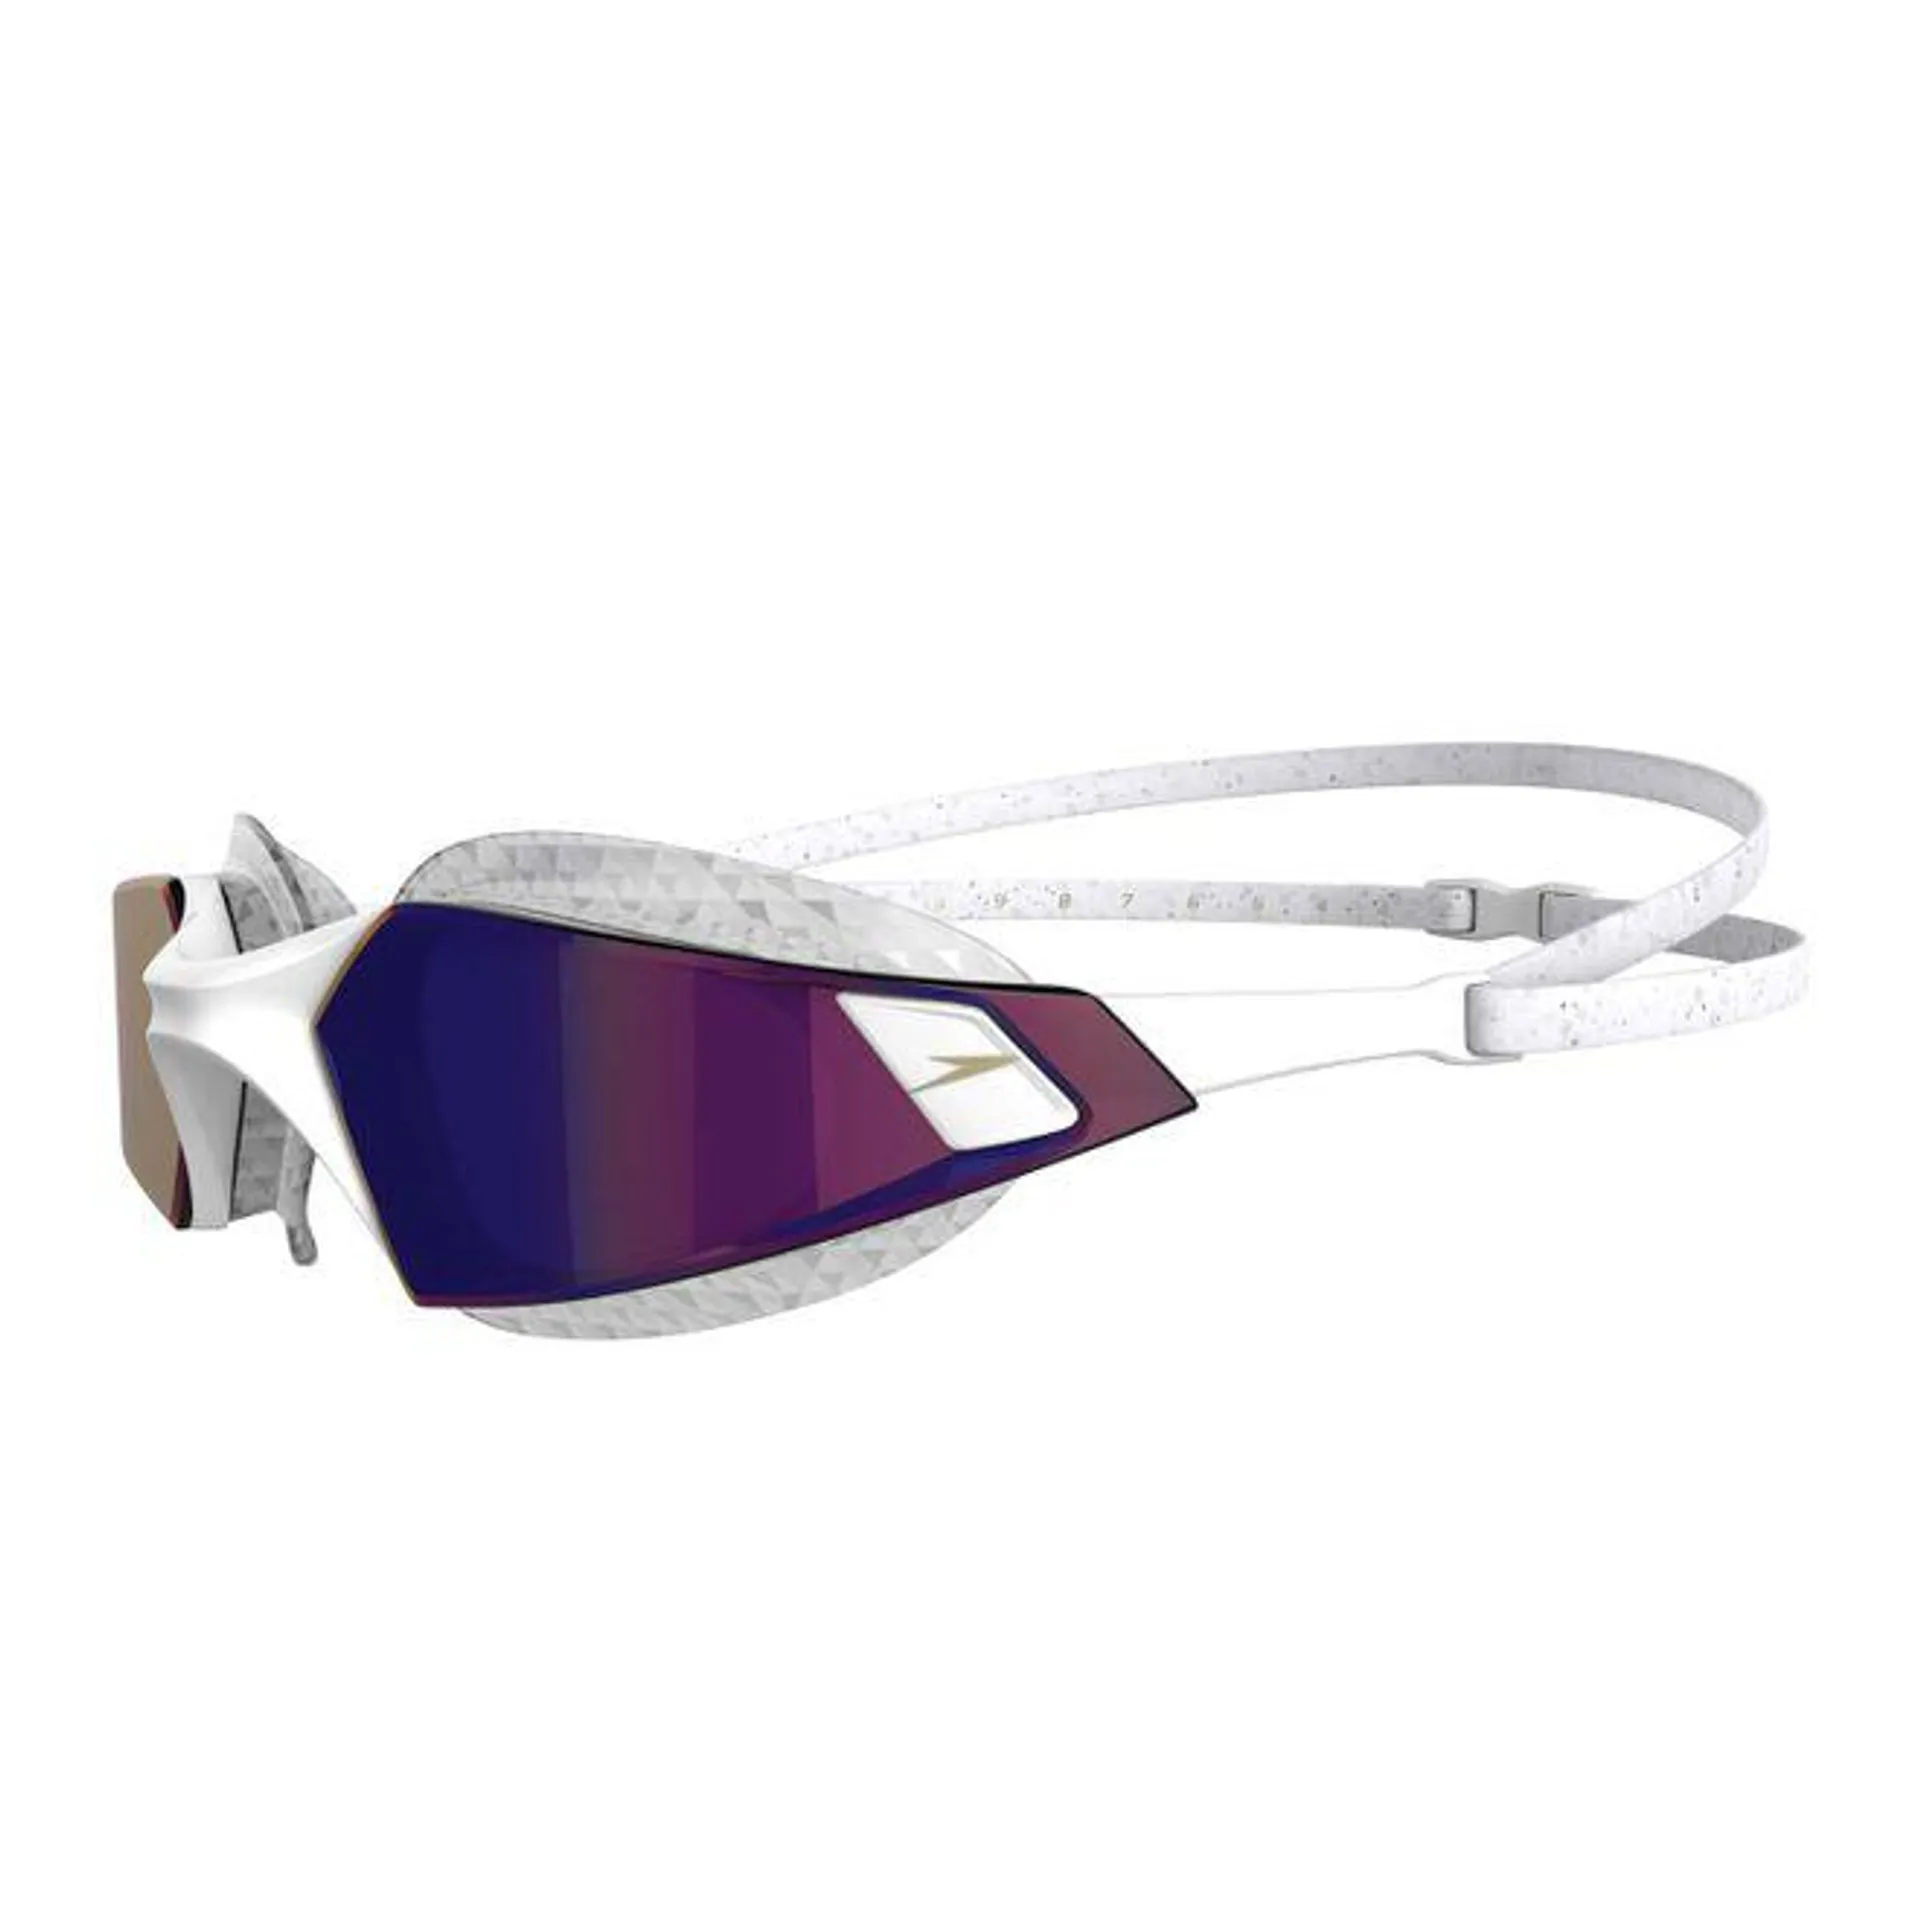 Speedo Mens Aquapulse Pro Mirror Goggles in White purple